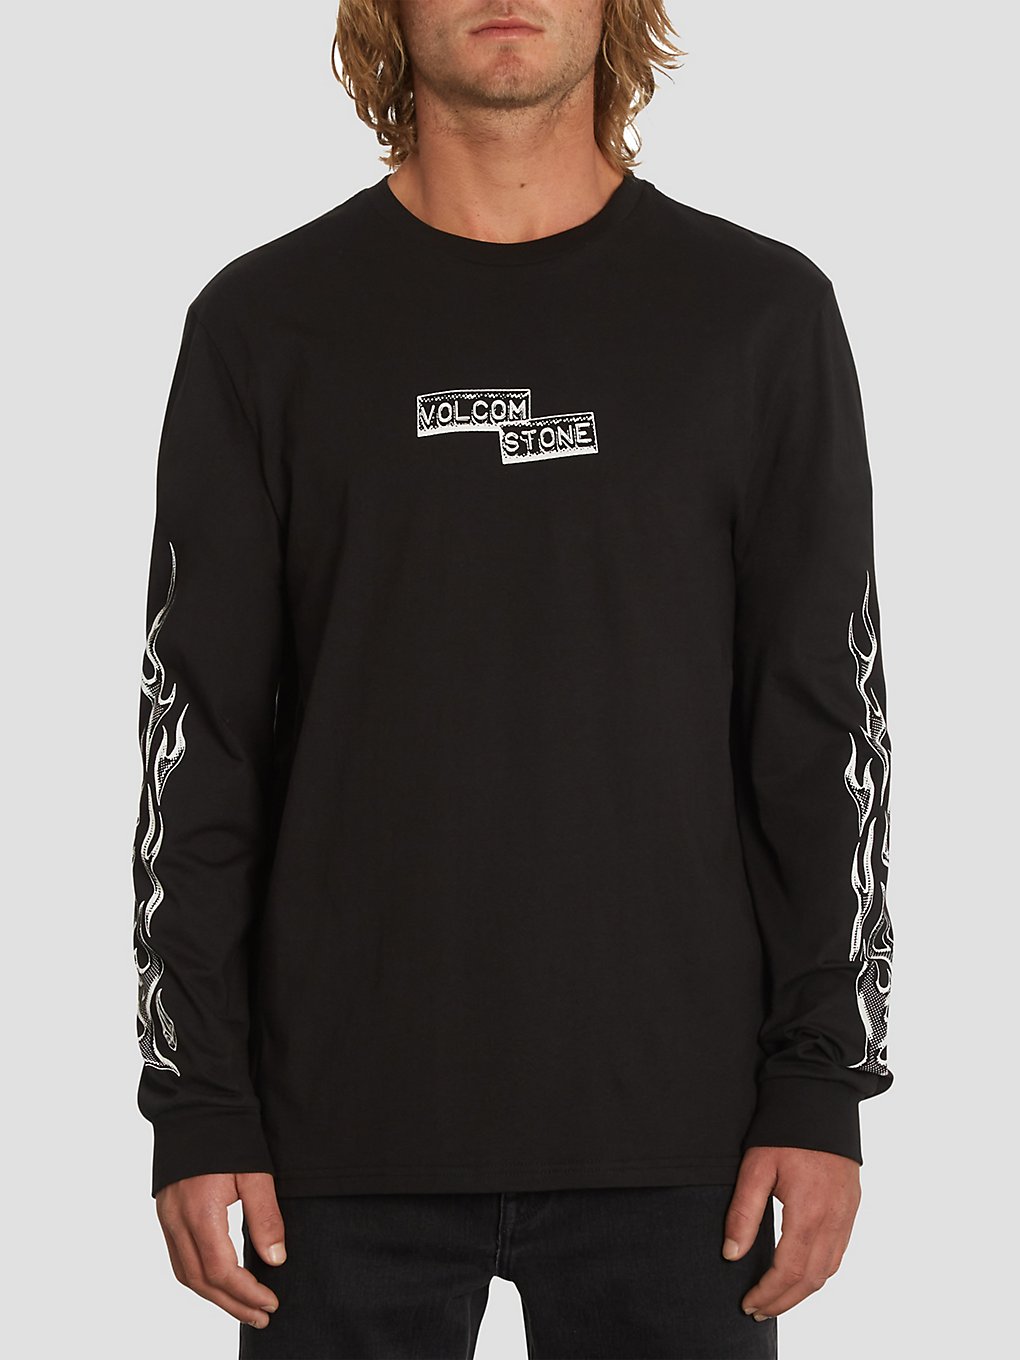 Volcom Ignighter Bsc Long Sleeve T-Shirt black kaufen